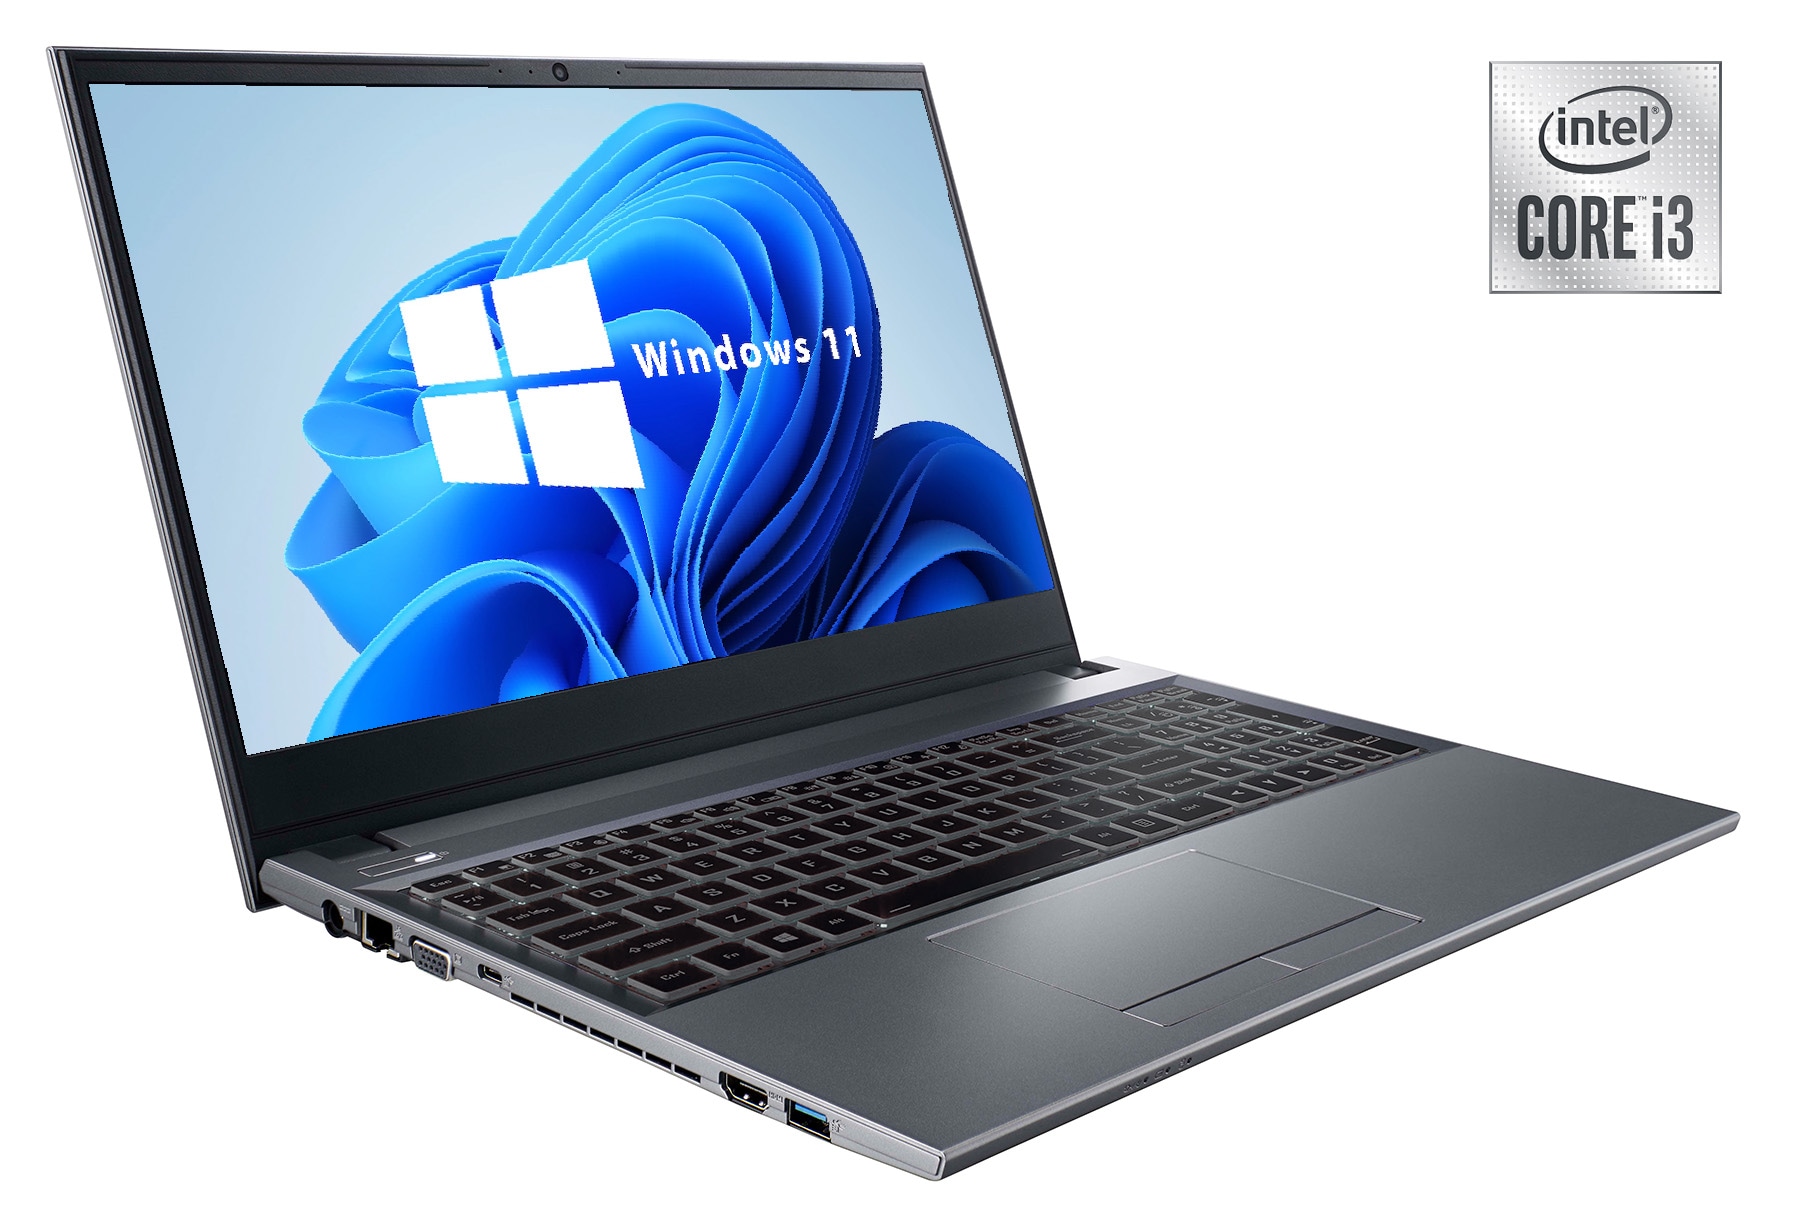 Notebook »1688«, 39,62 cm, / 15,6 Zoll, Intel, Core i3, UHD Graphics, 480 GB SSD